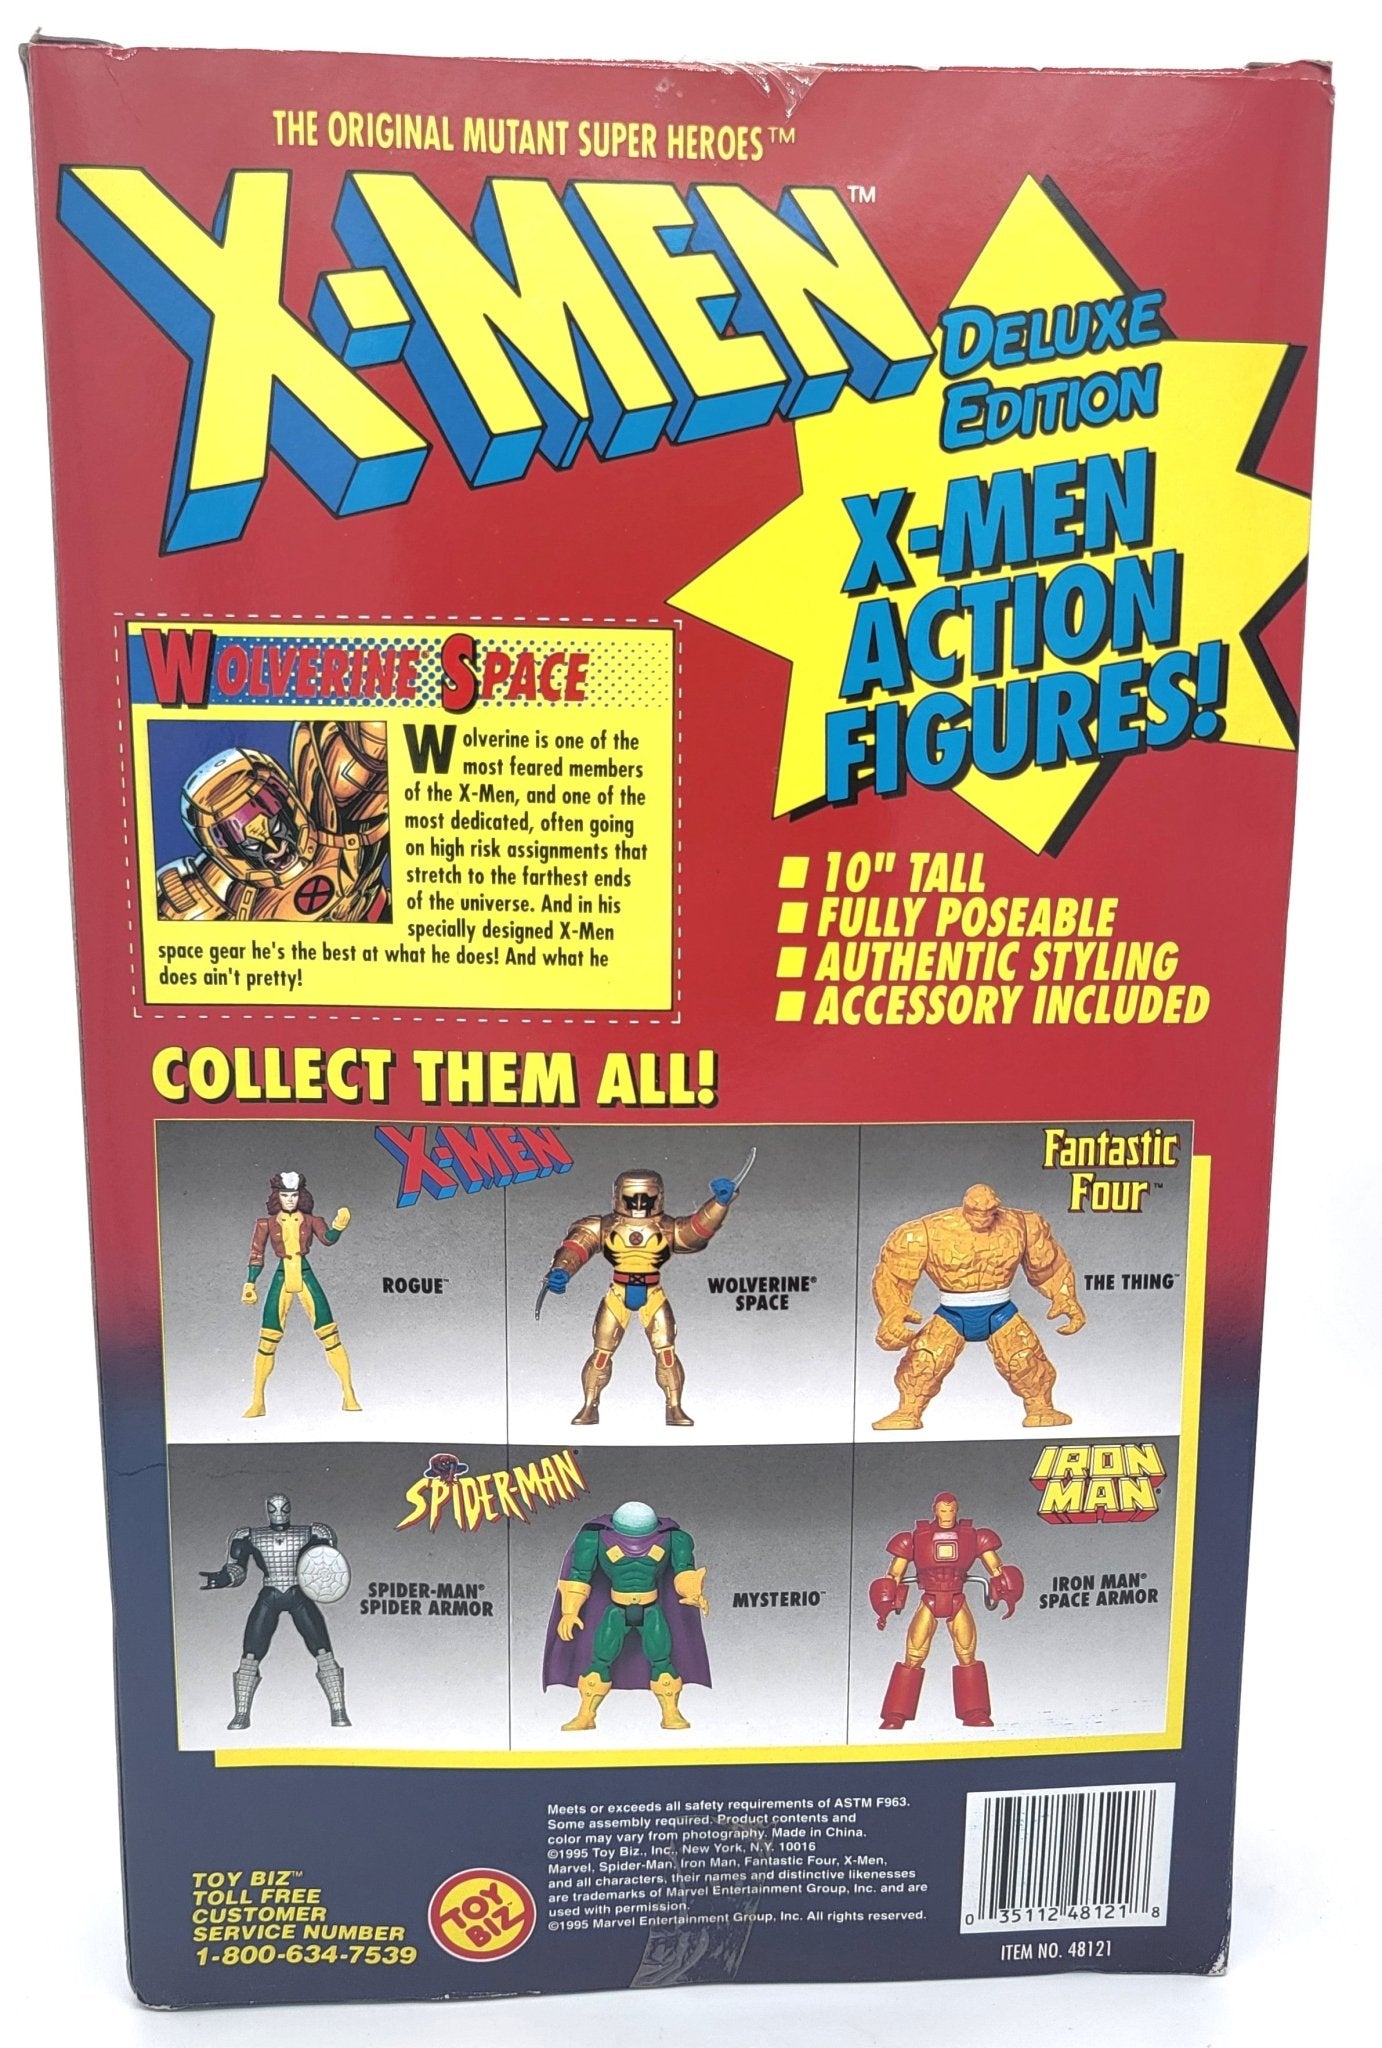 Toy Biz - Toy Biz | X-Men Deluxe Edition Wolverine Space 1995 | Vintage Marvel Action Figure - Action Figures - Steady Bunny Shop